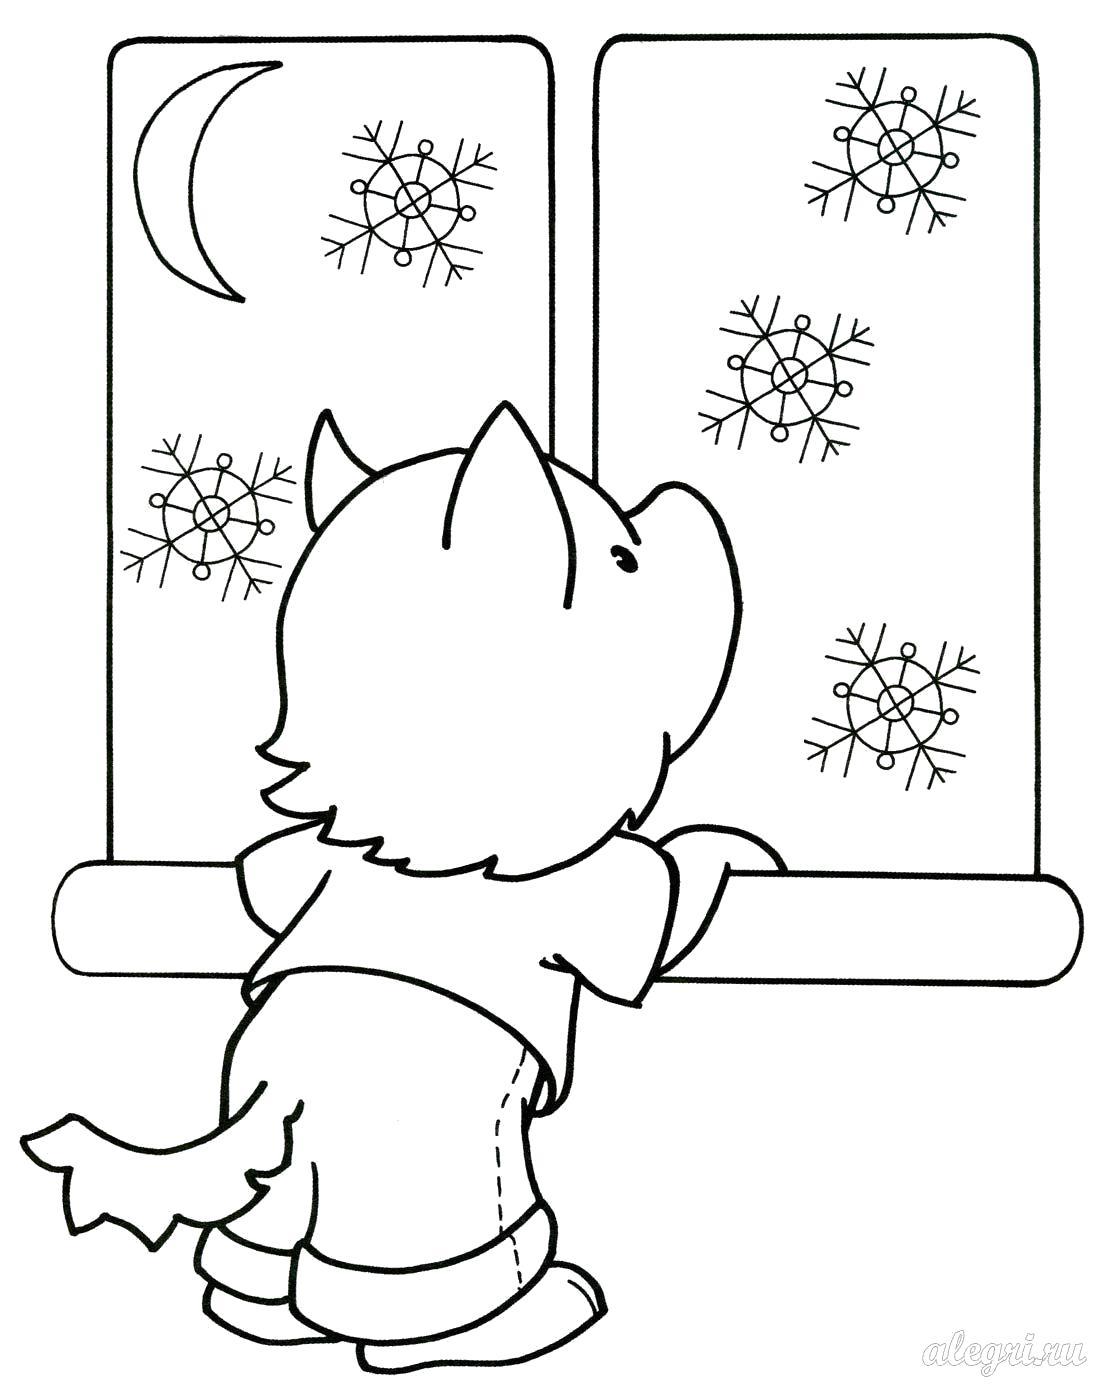 Название: Раскраска собачка смотрит в окно, в окне снег, снежинки, луна. Категория: Зимние. Теги: Зимние.